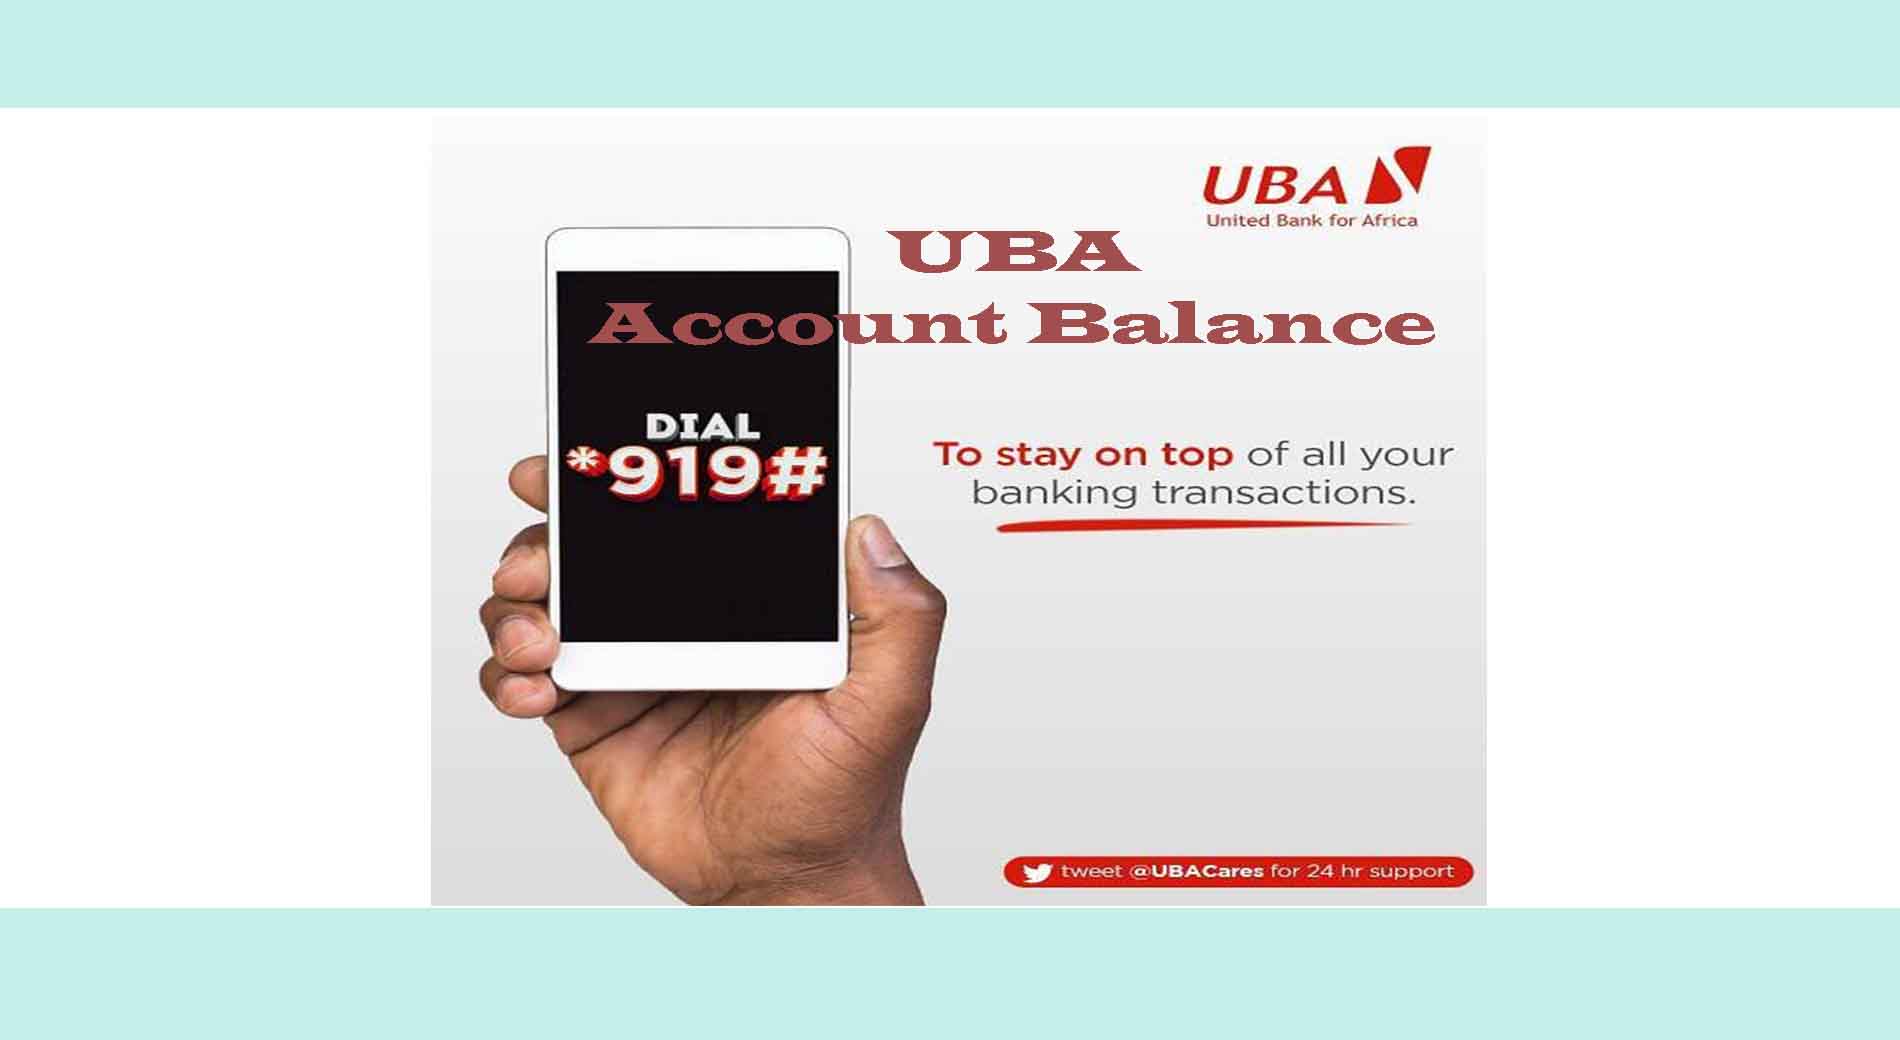 UBA account balance using *919# or mobile banking app